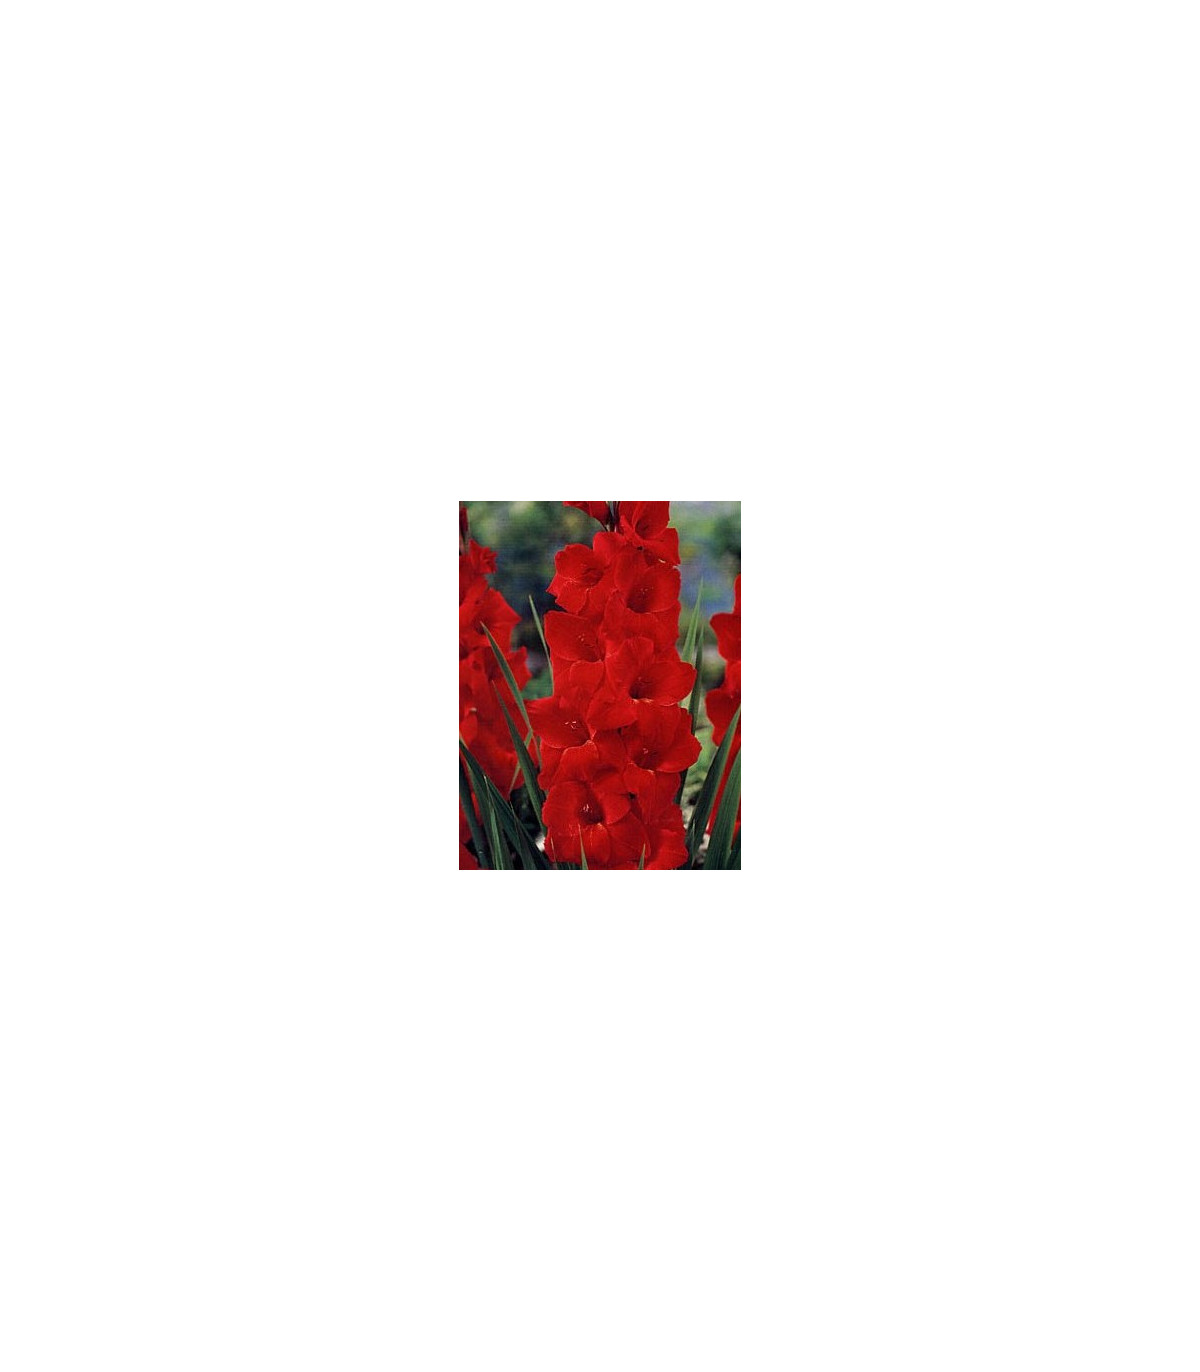 Gladiola červená Hunting song - Hunting song gladiolus - predaj cibuľovín - 3 ks